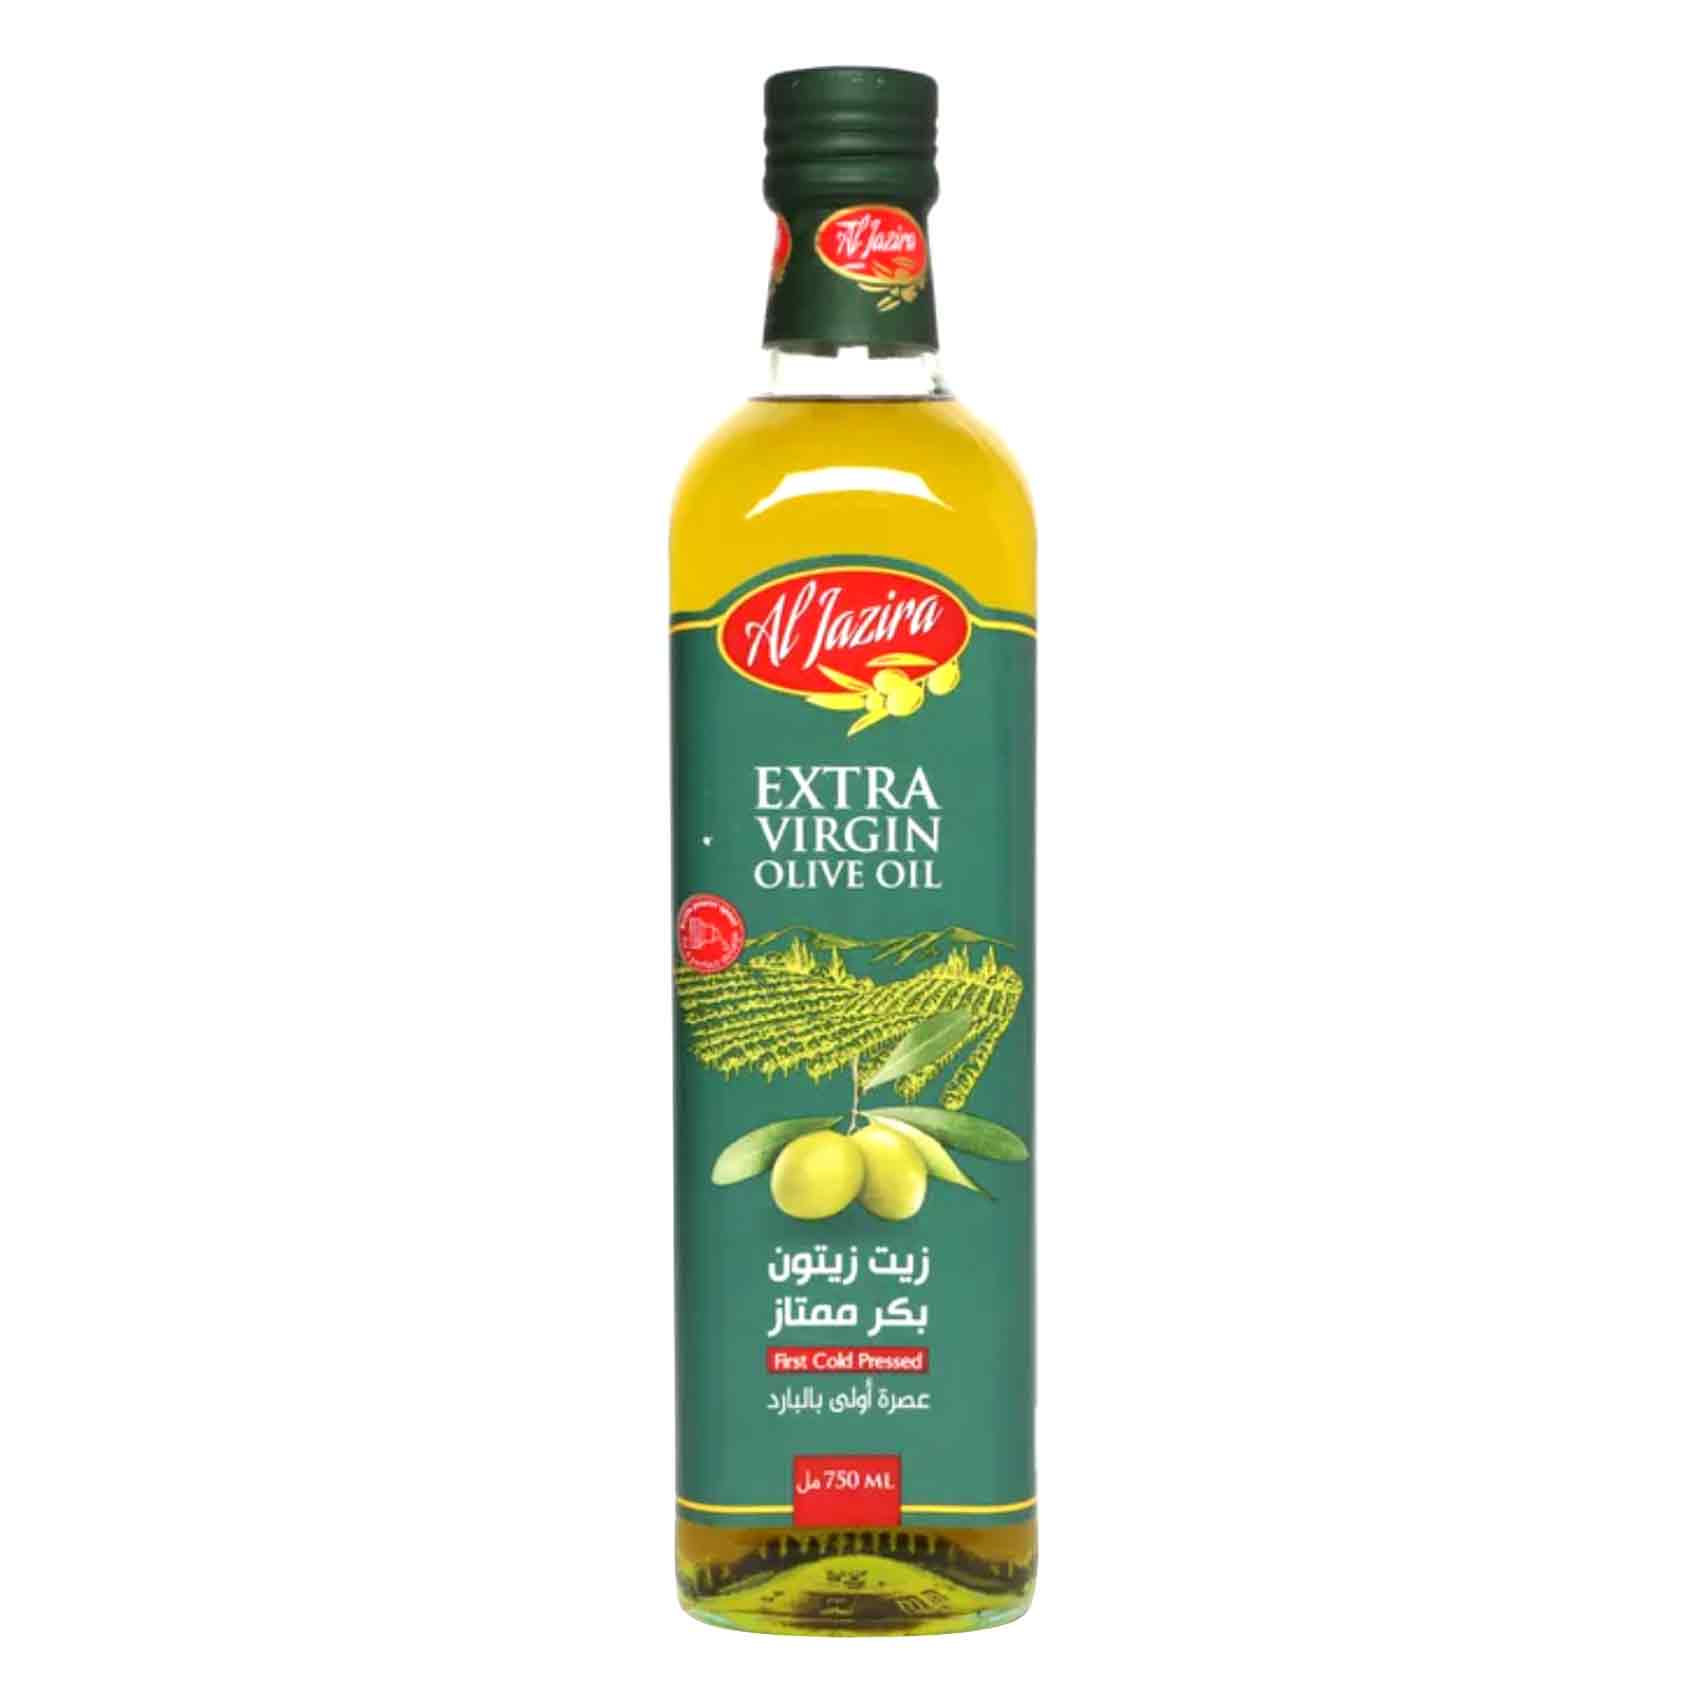 Al Jazira Extra Virgin Olive Oil 750ml